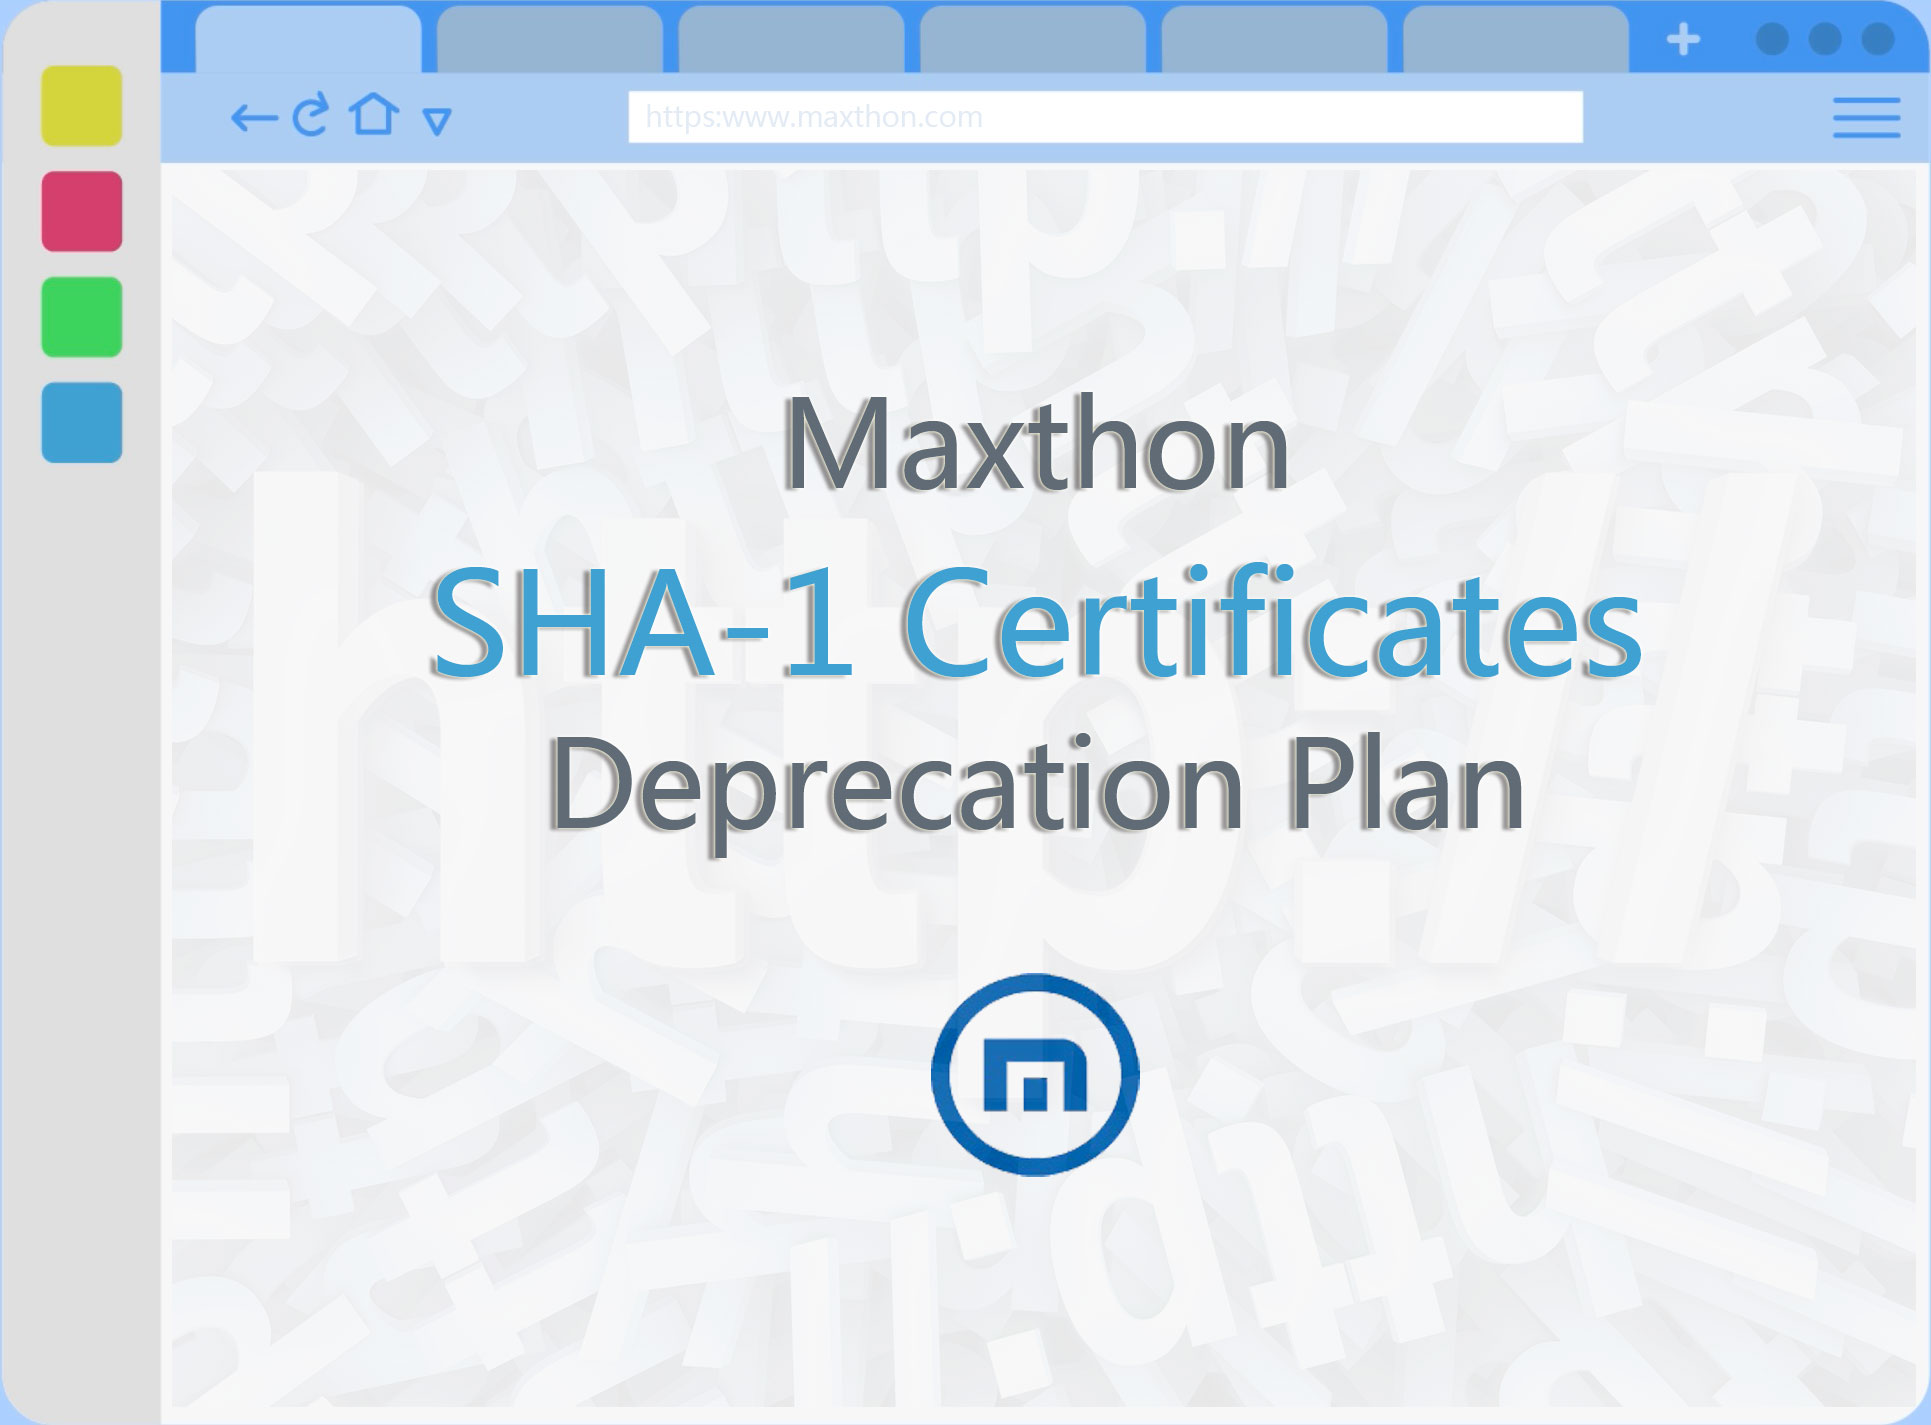 Maxthon SHA-1 Certificates Deprecation Plan